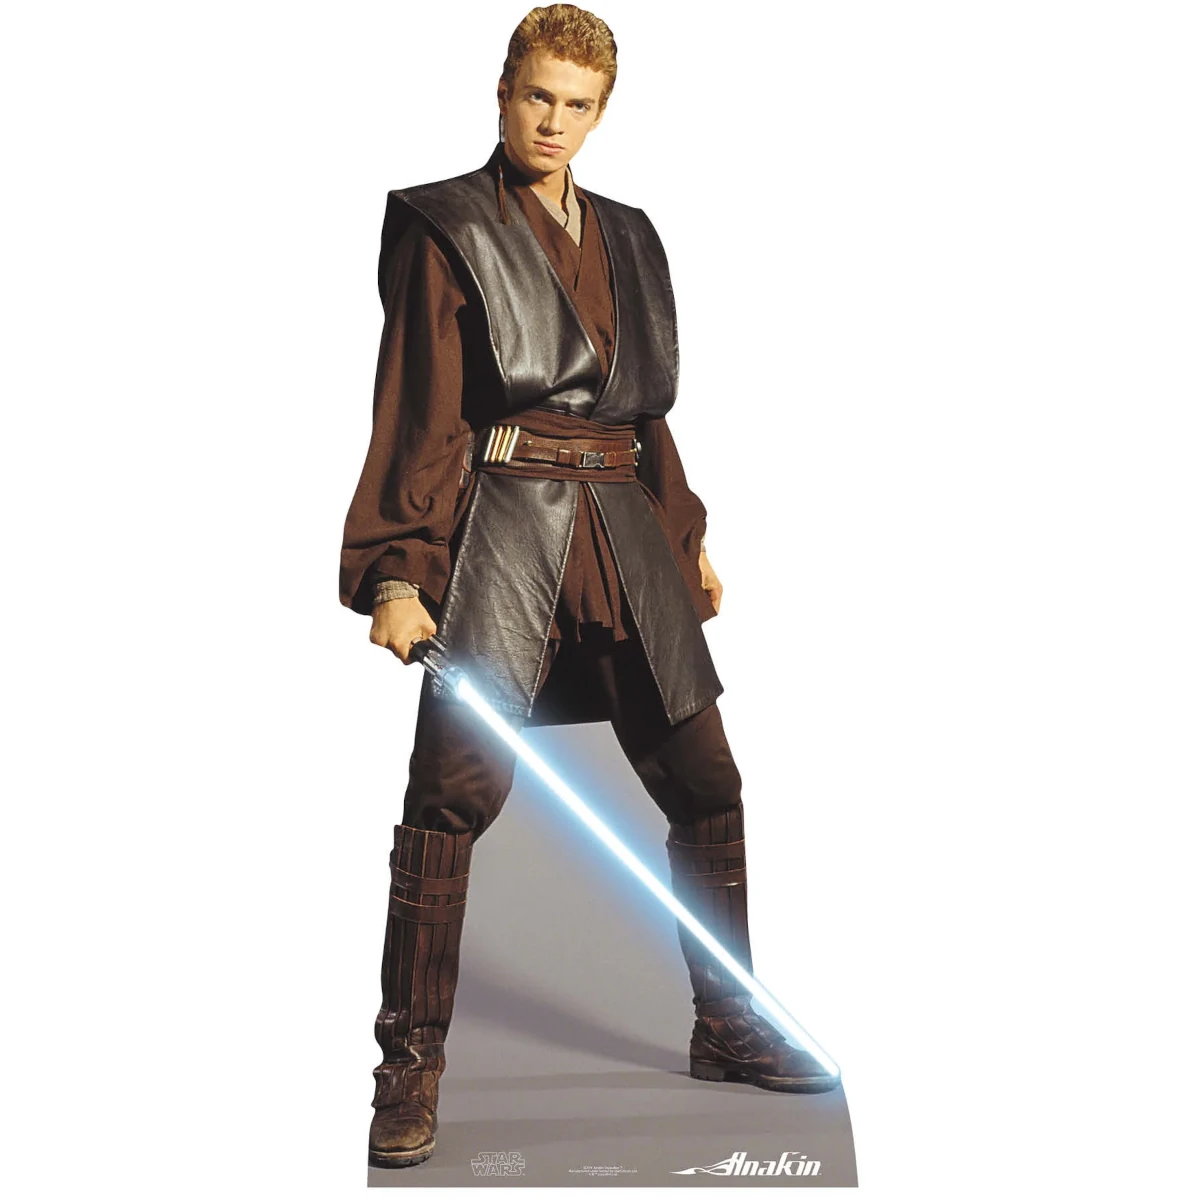 SC475 Anakin Skywalker 'Lightsaber' (Star Wars) Official Lifesize Cardboard Cutout Standee Front